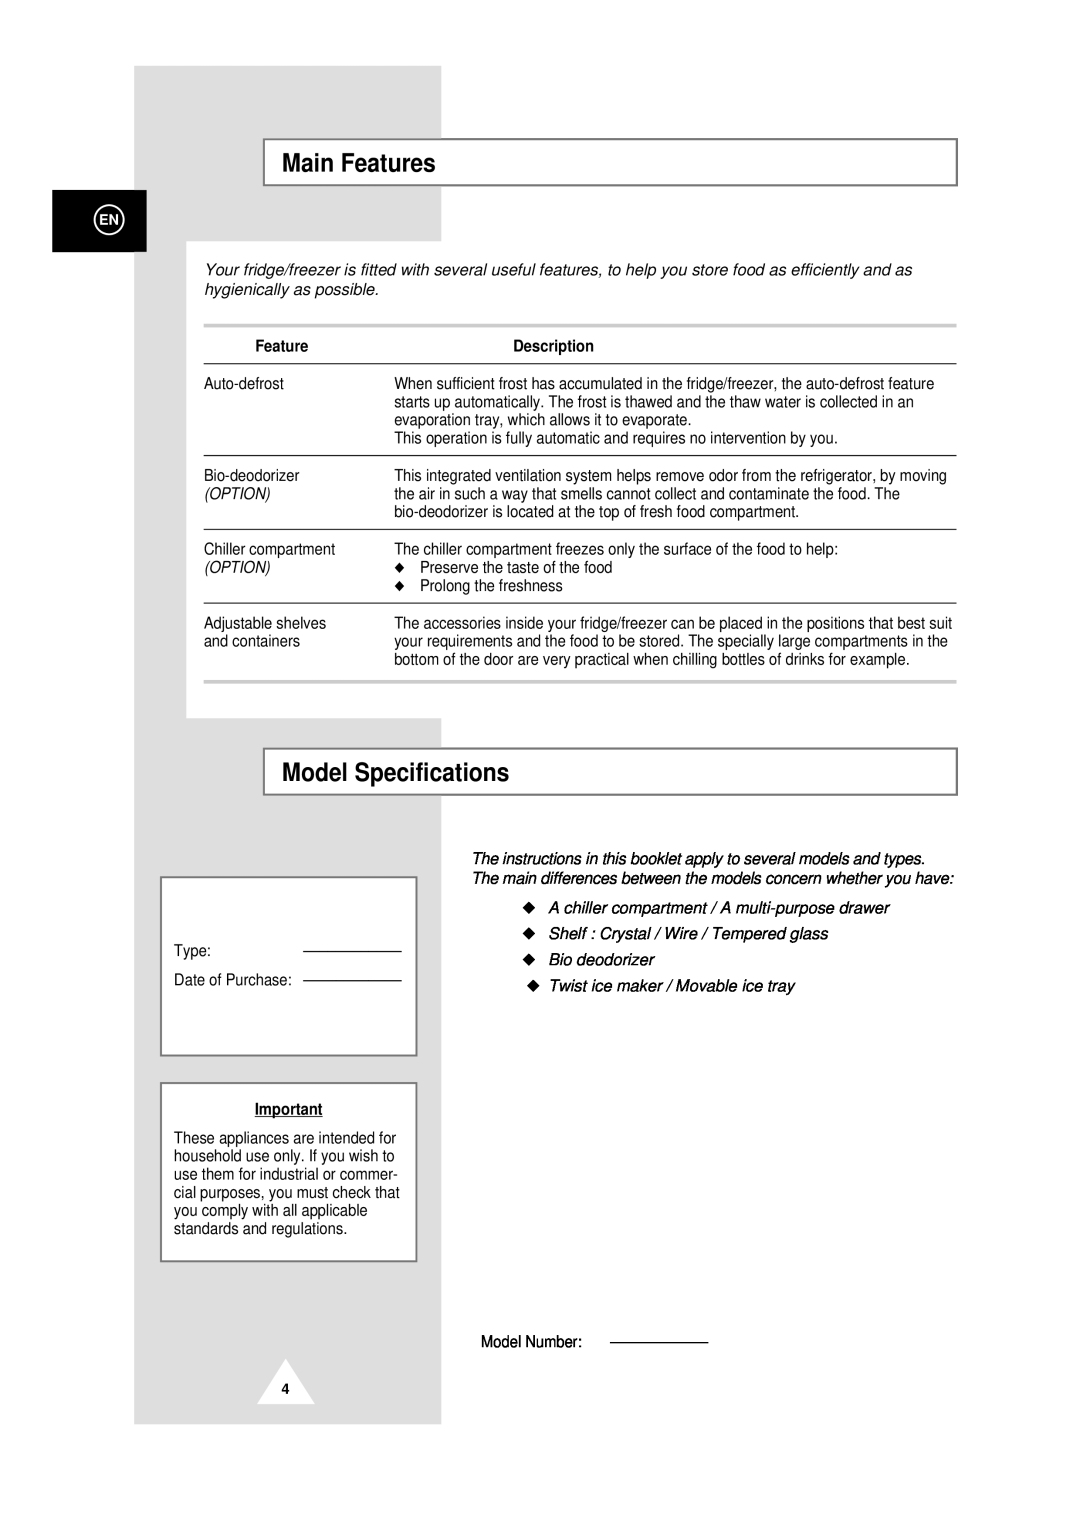 Samsung DA99-00478C instruction manual Main Features, Model Specifications, Description 